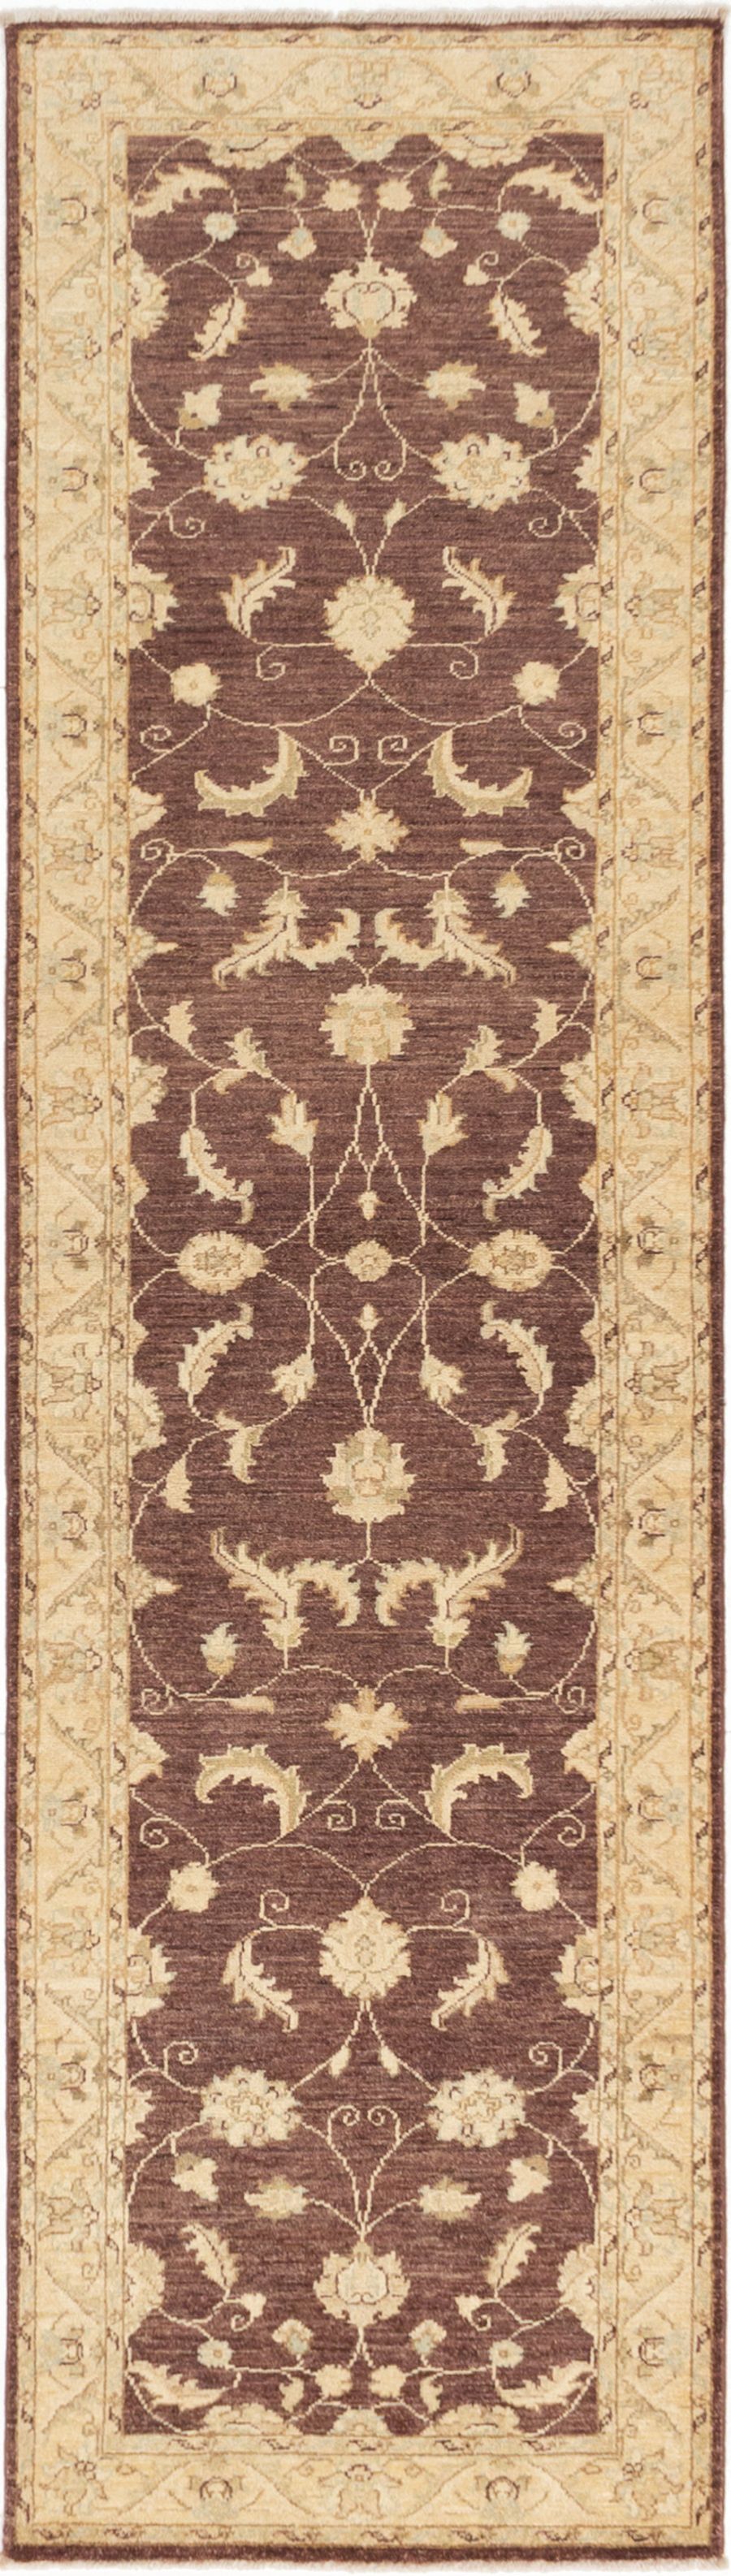 Hand-knotted Chobi Finest Dark Brown Wool Rug 2'9" x 9'8" Size: 2'9" x 9'8"  